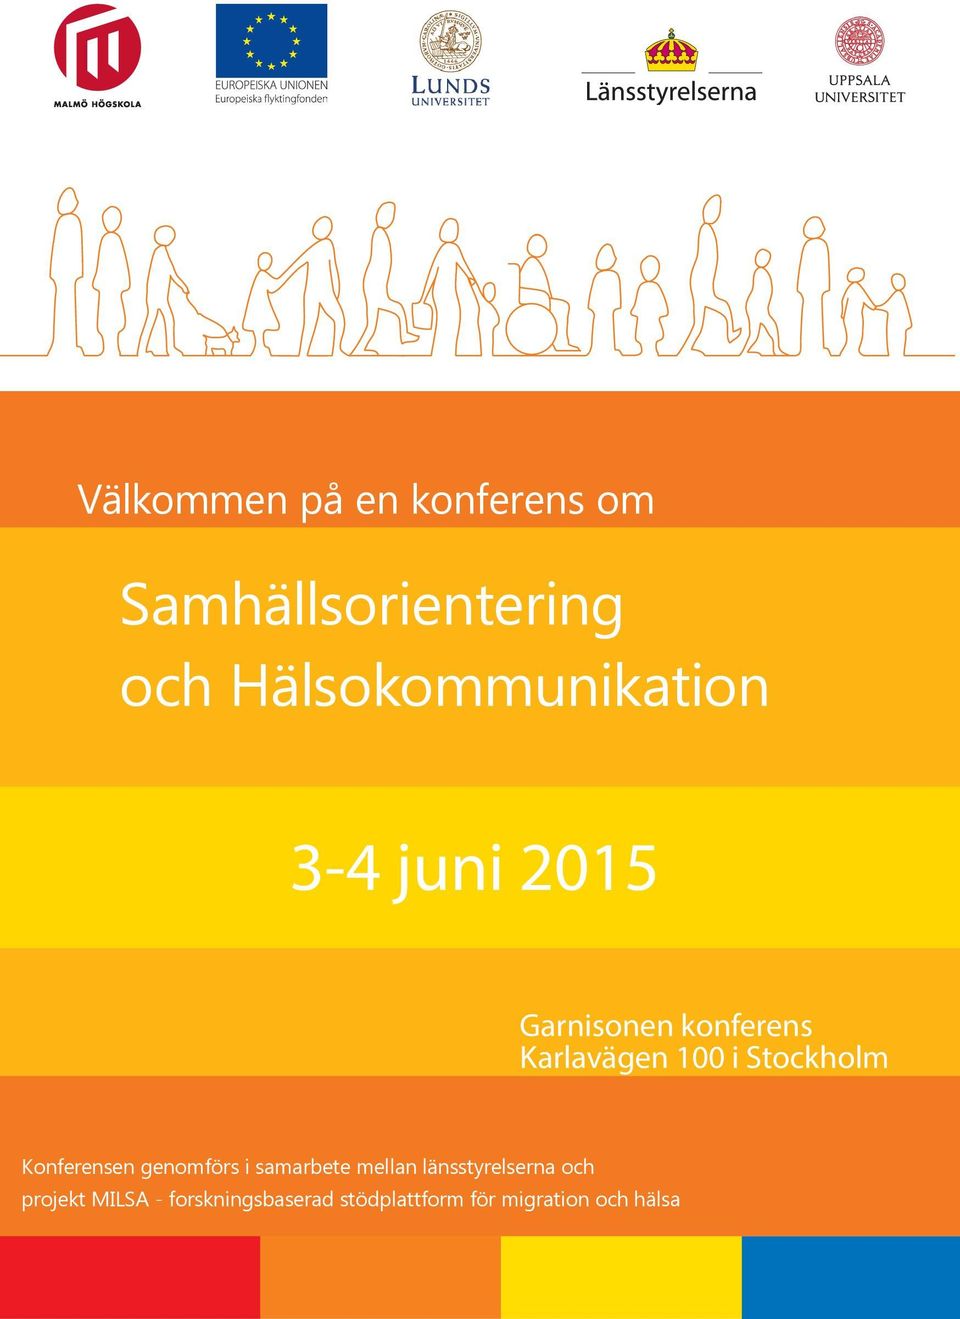 100 i Stockholm Konferensen genomförs i samarbete mellan